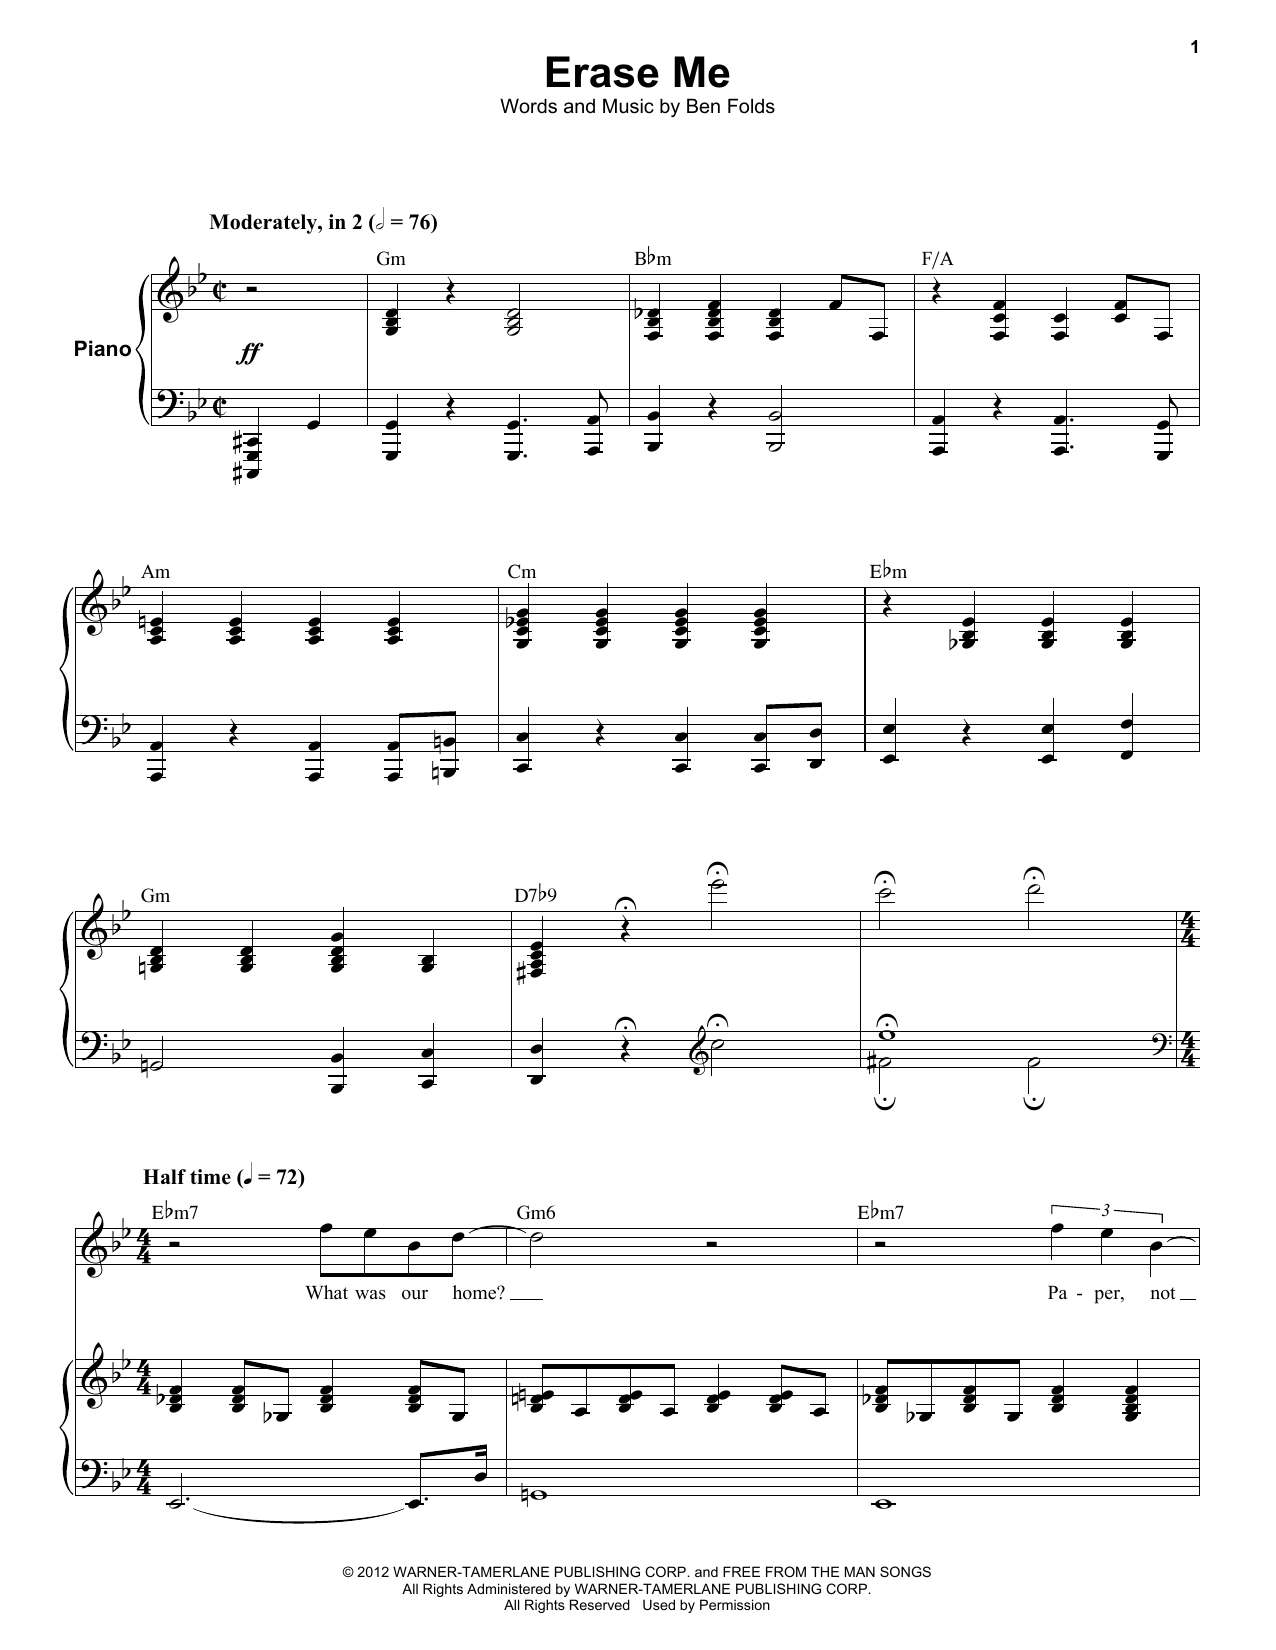 Ben Folds Five Erase Me Sheet Music Notes & Chords for Keyboard Transcription - Download or Print PDF